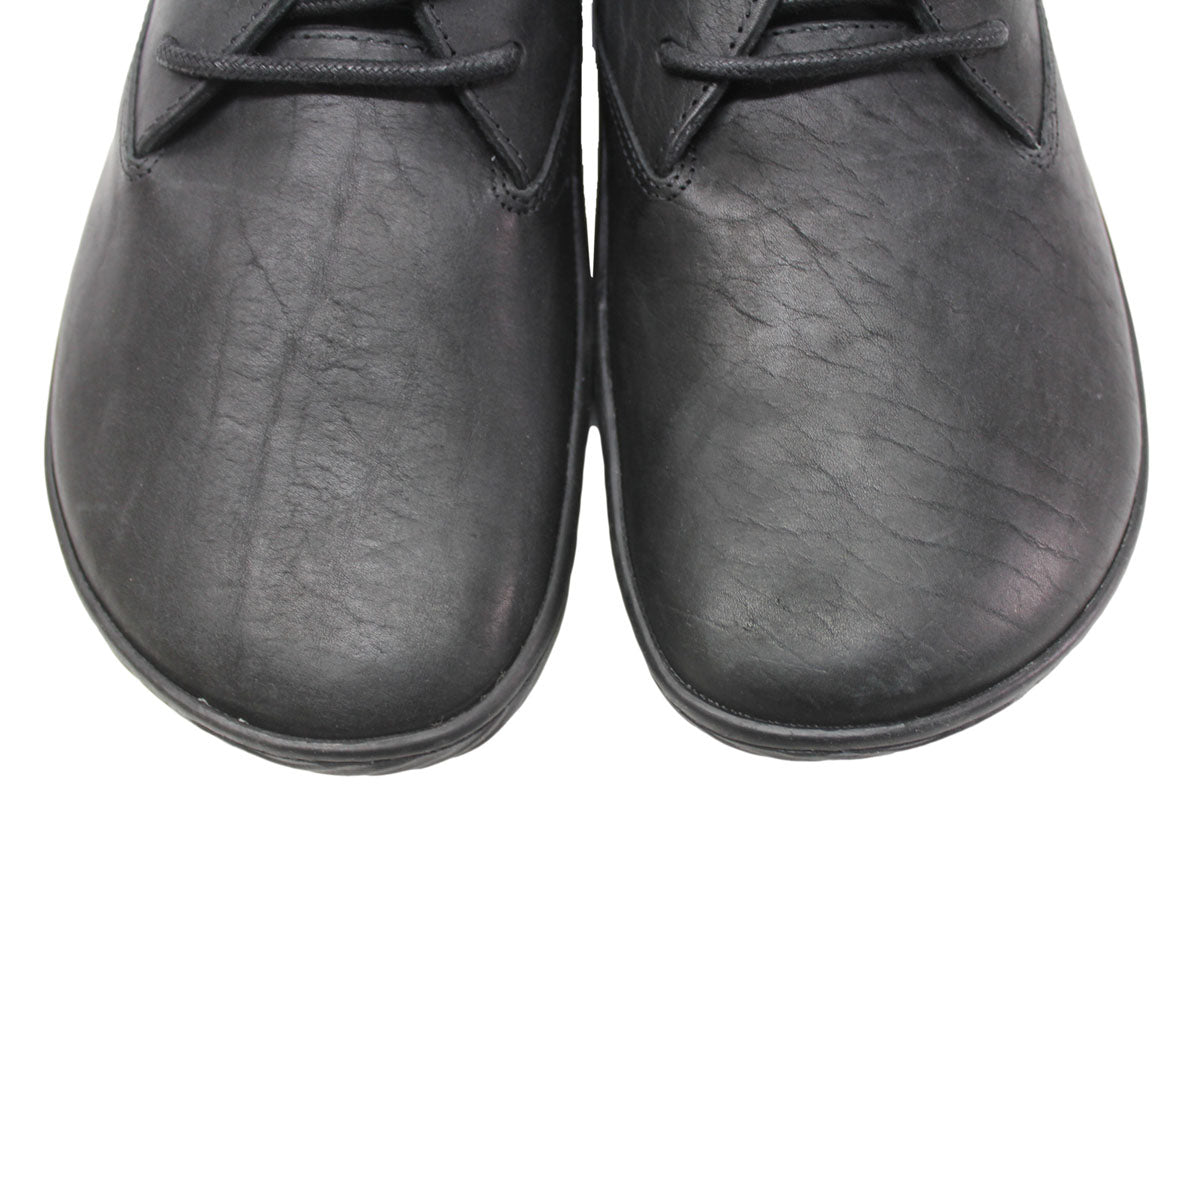 Vivobarefoot Mens Addis Oxford Leather Shoes - UK 7